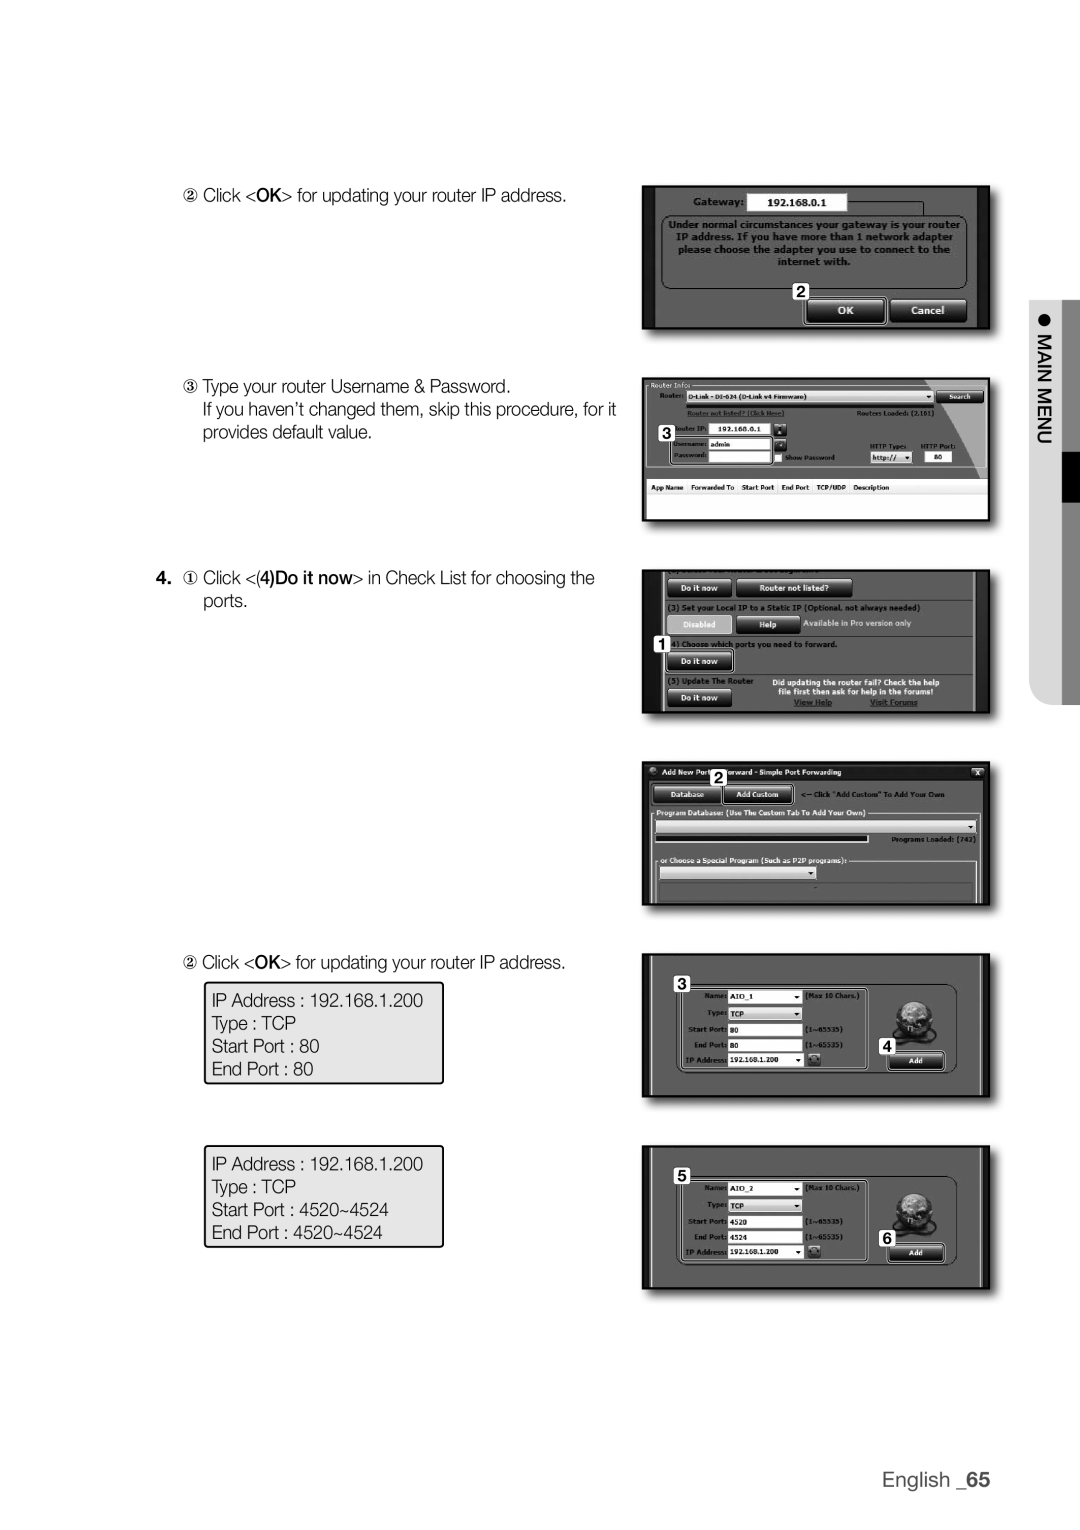 Samsung SDR3100 user manual English _65 